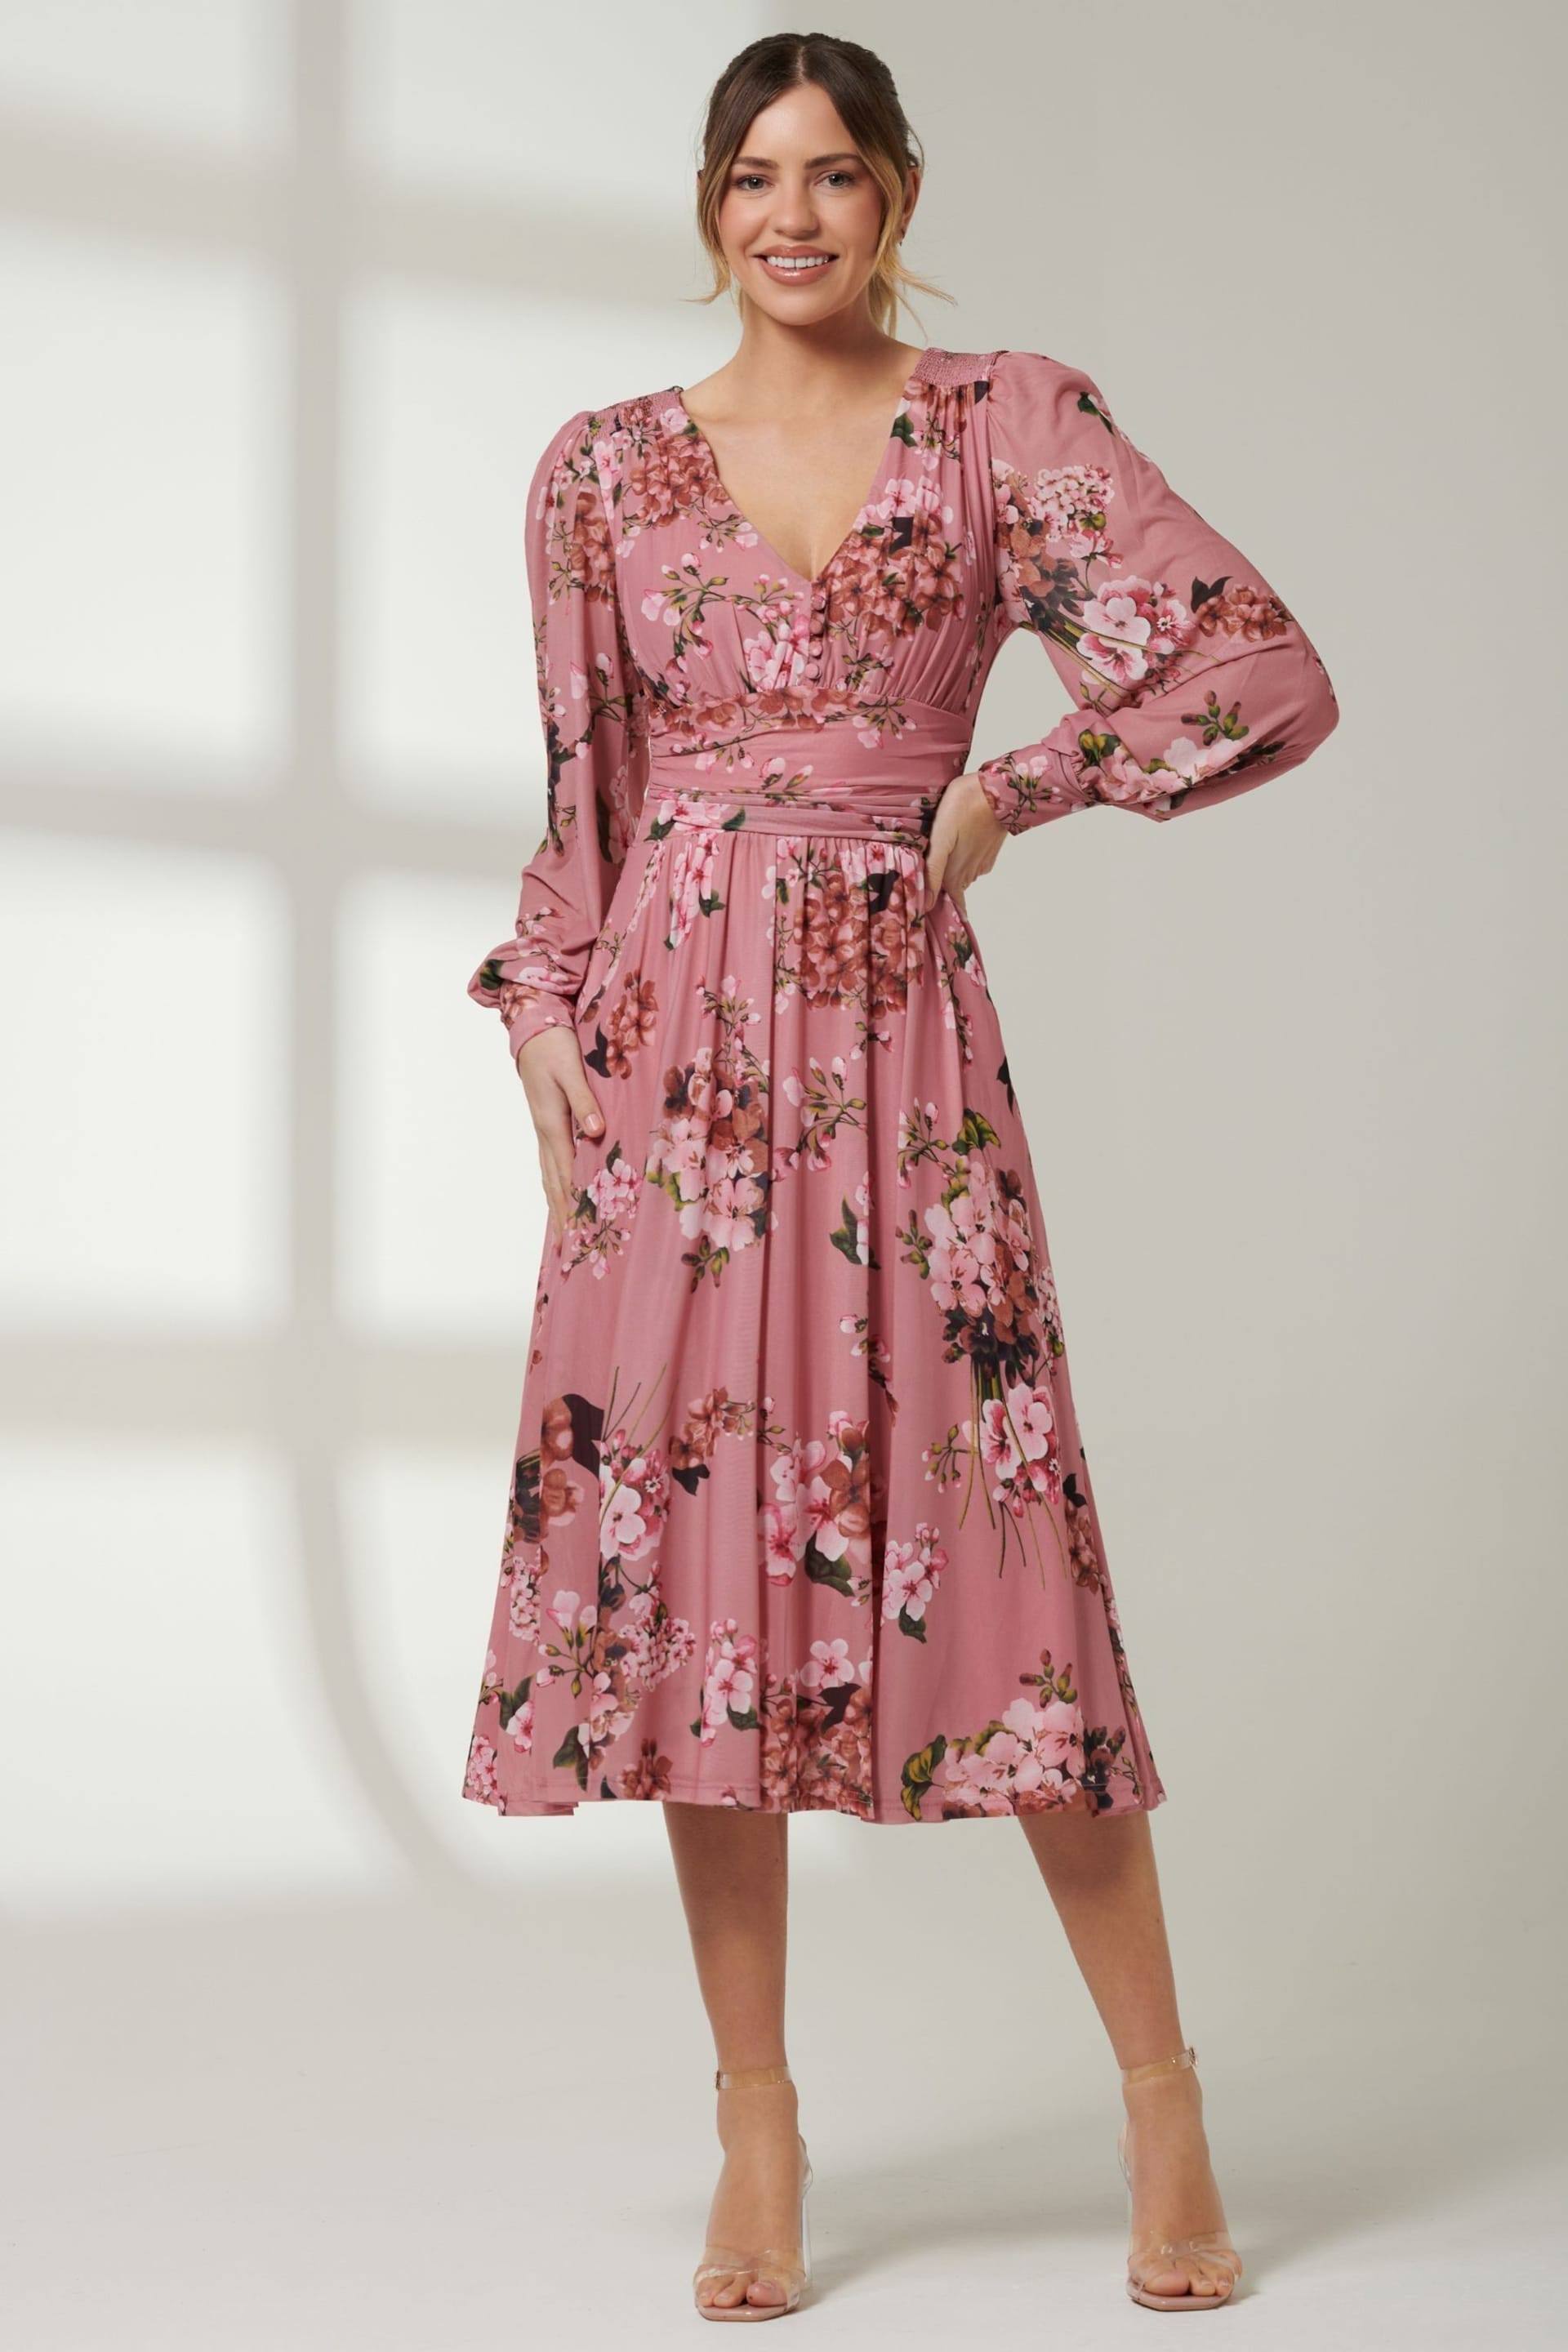 Jolie Moi Pink Long Sleeve Mesh Midi Dress - Image 1 of 6